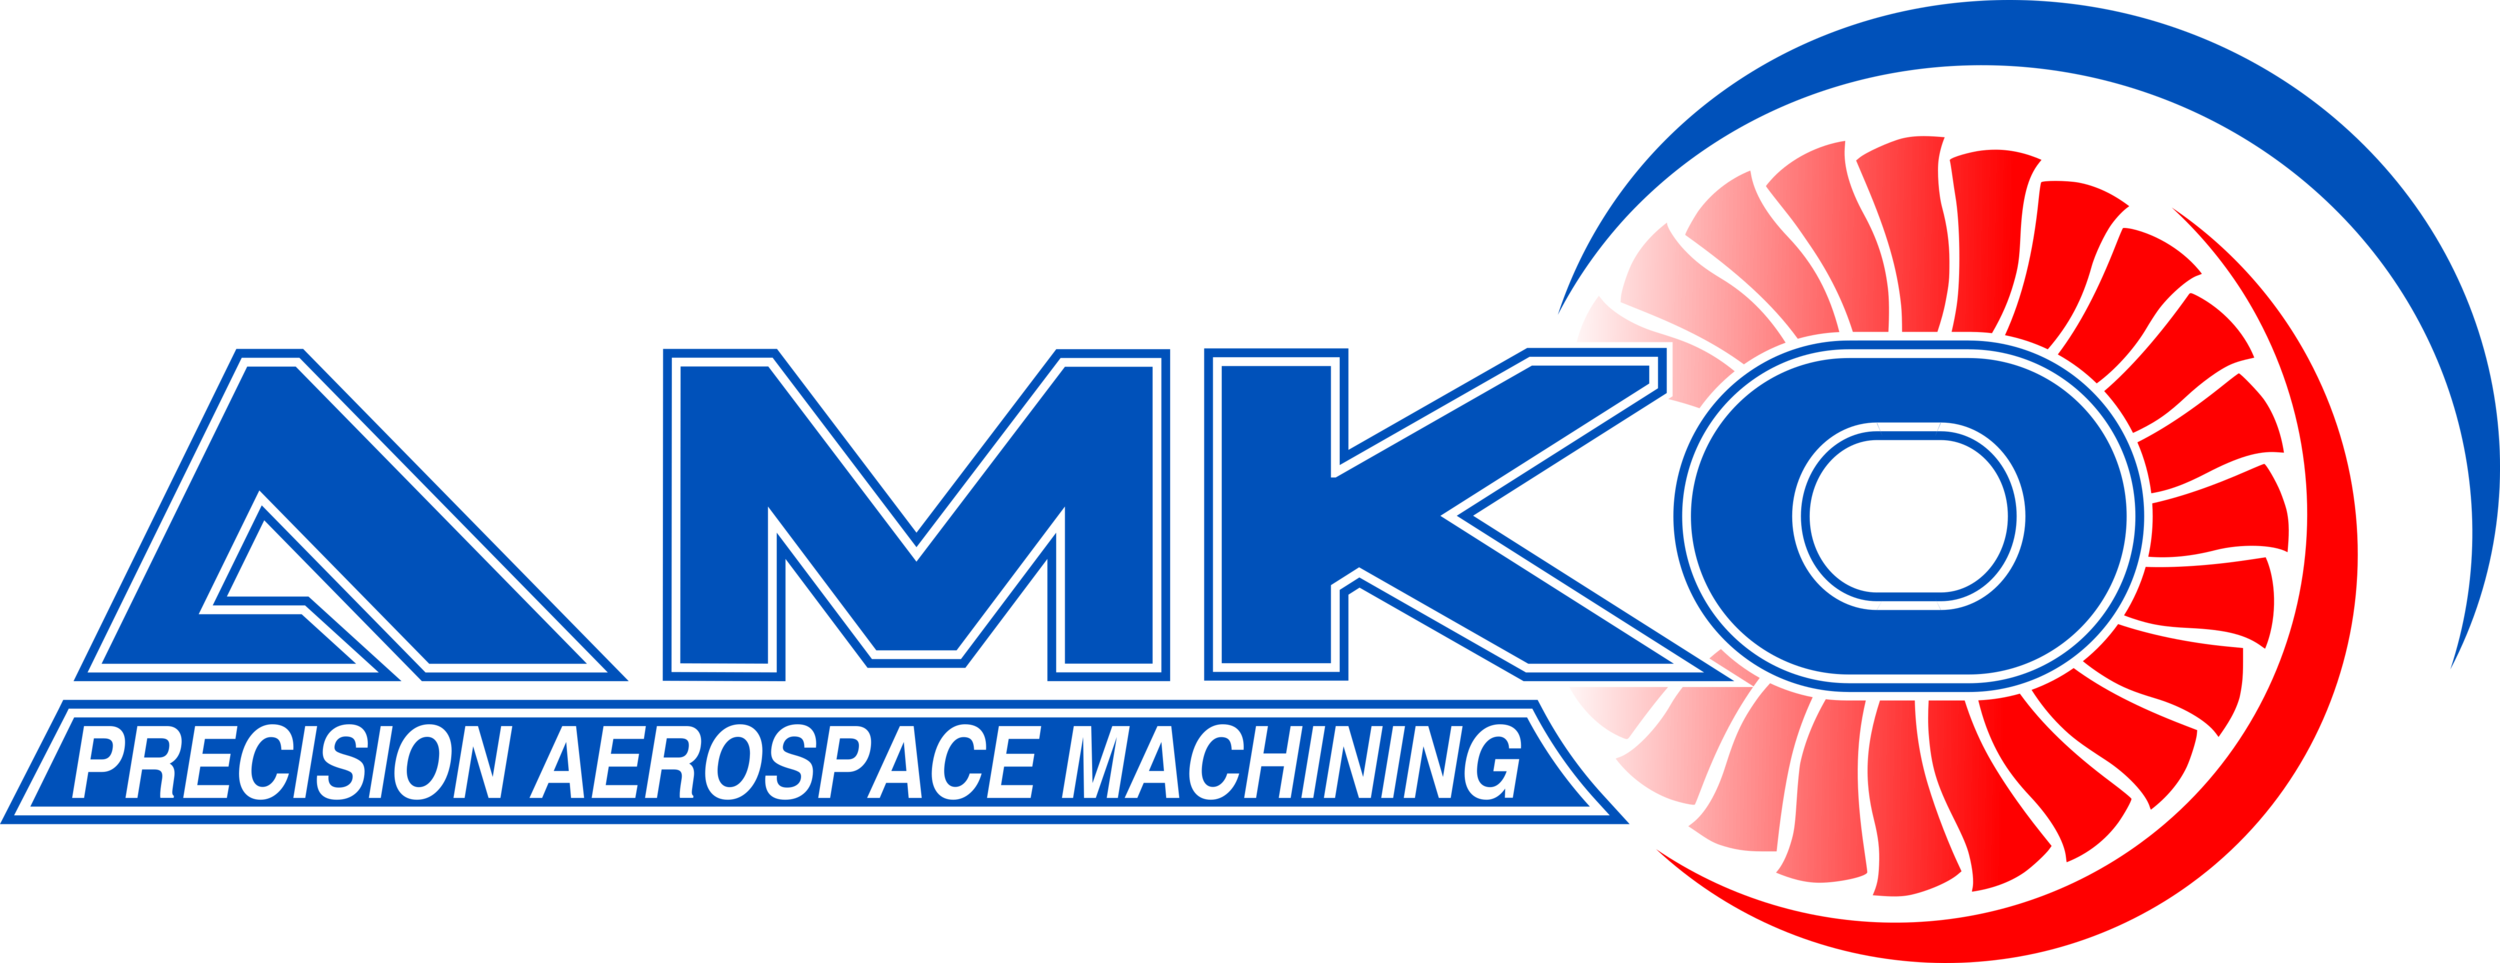 AMKO Precision Aerospace Machining